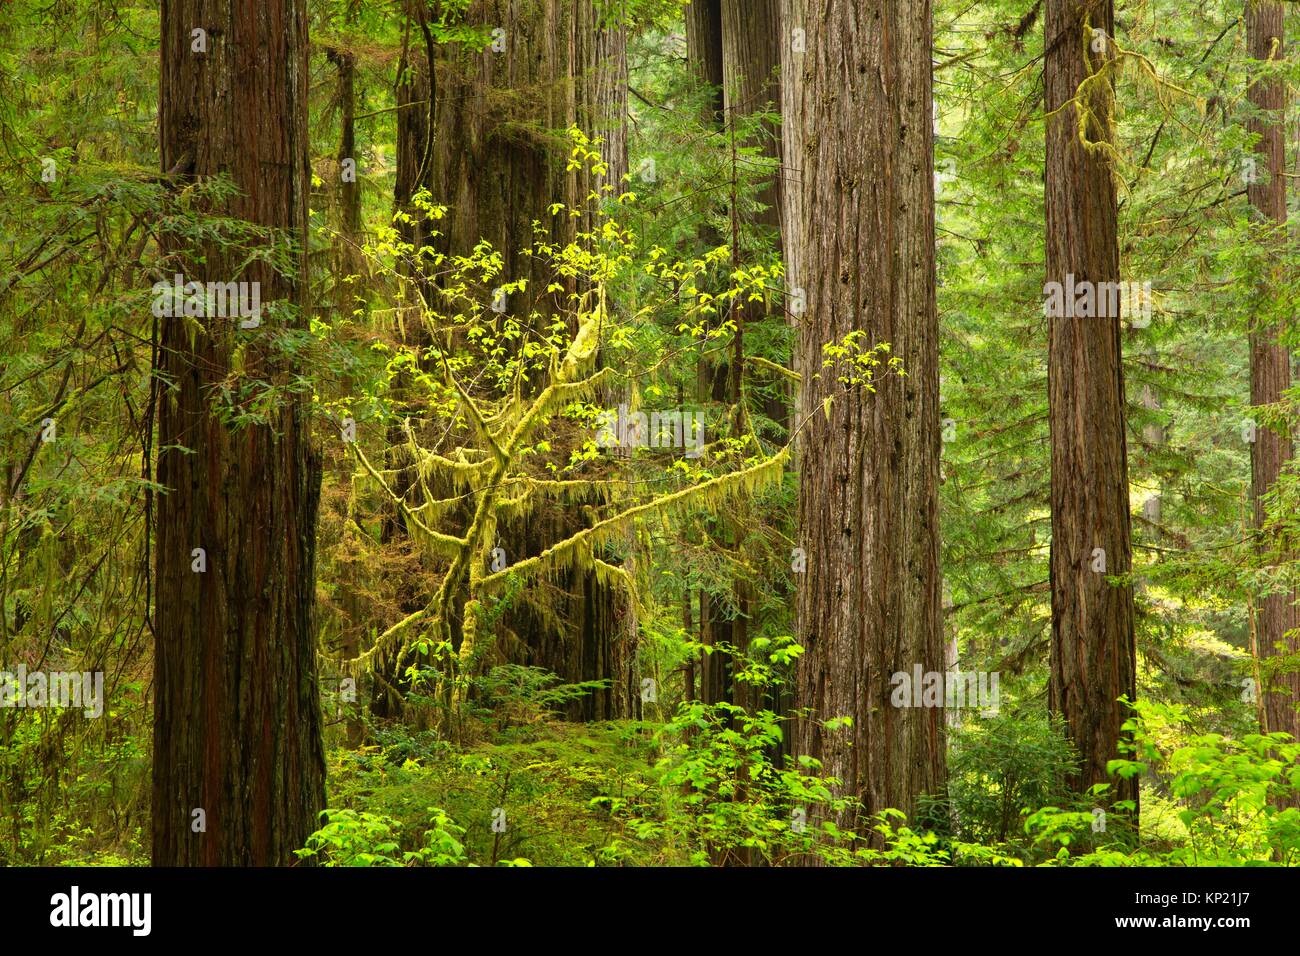 Coast redwood (Sequoia sempervirens) forest, Prairie Creek Redwoods State Park, Redwood National Park, California. Stock Photo